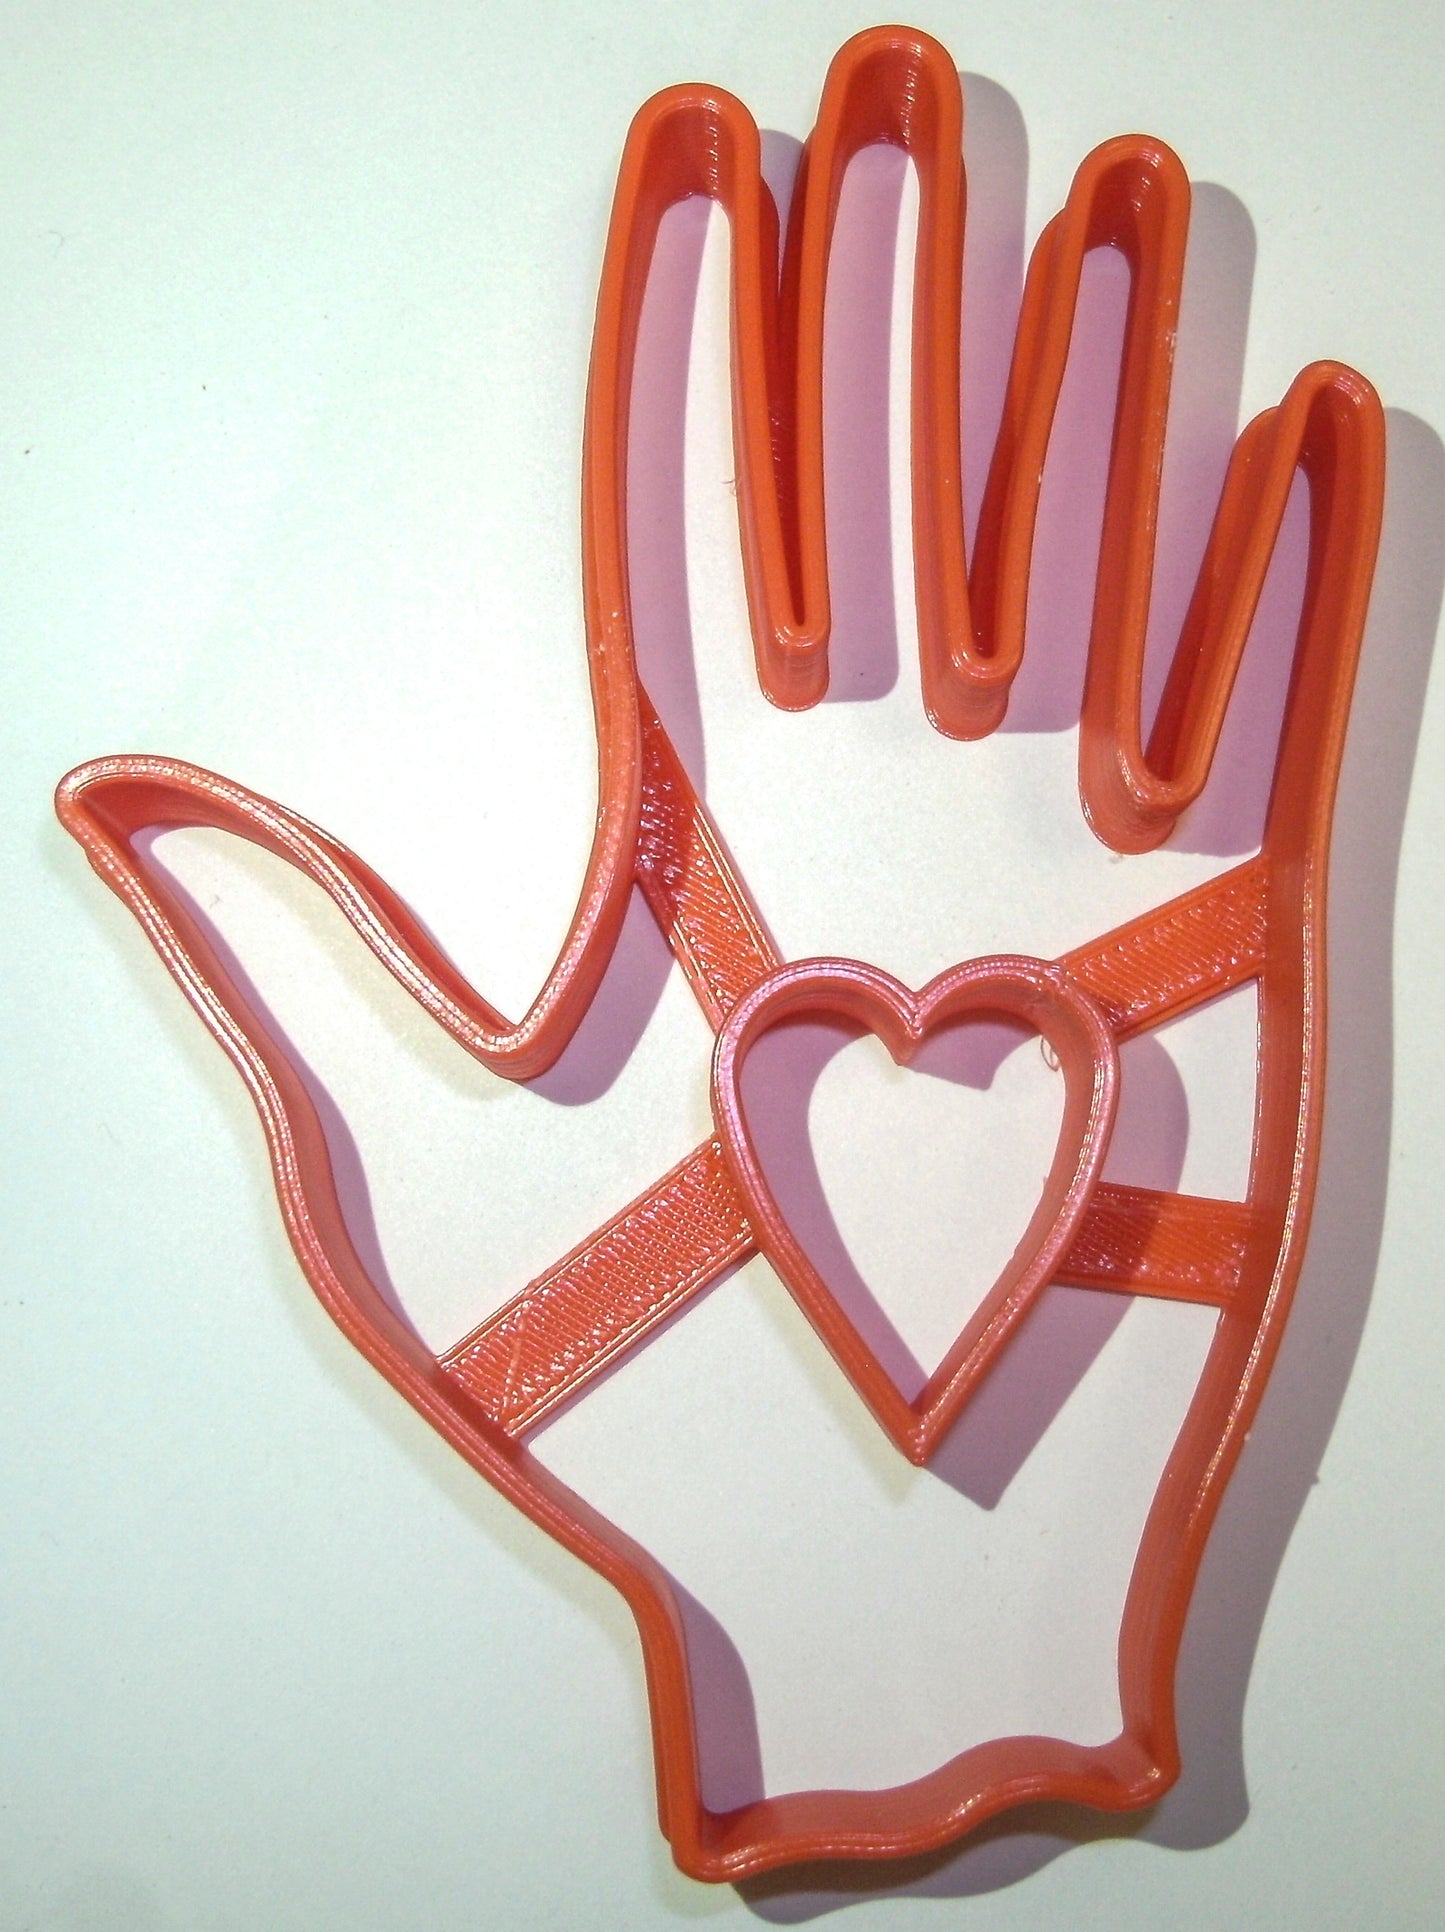 6x Hand with Heart Fondant Cutter Cupcake Topper Size 1.75" USA FD606